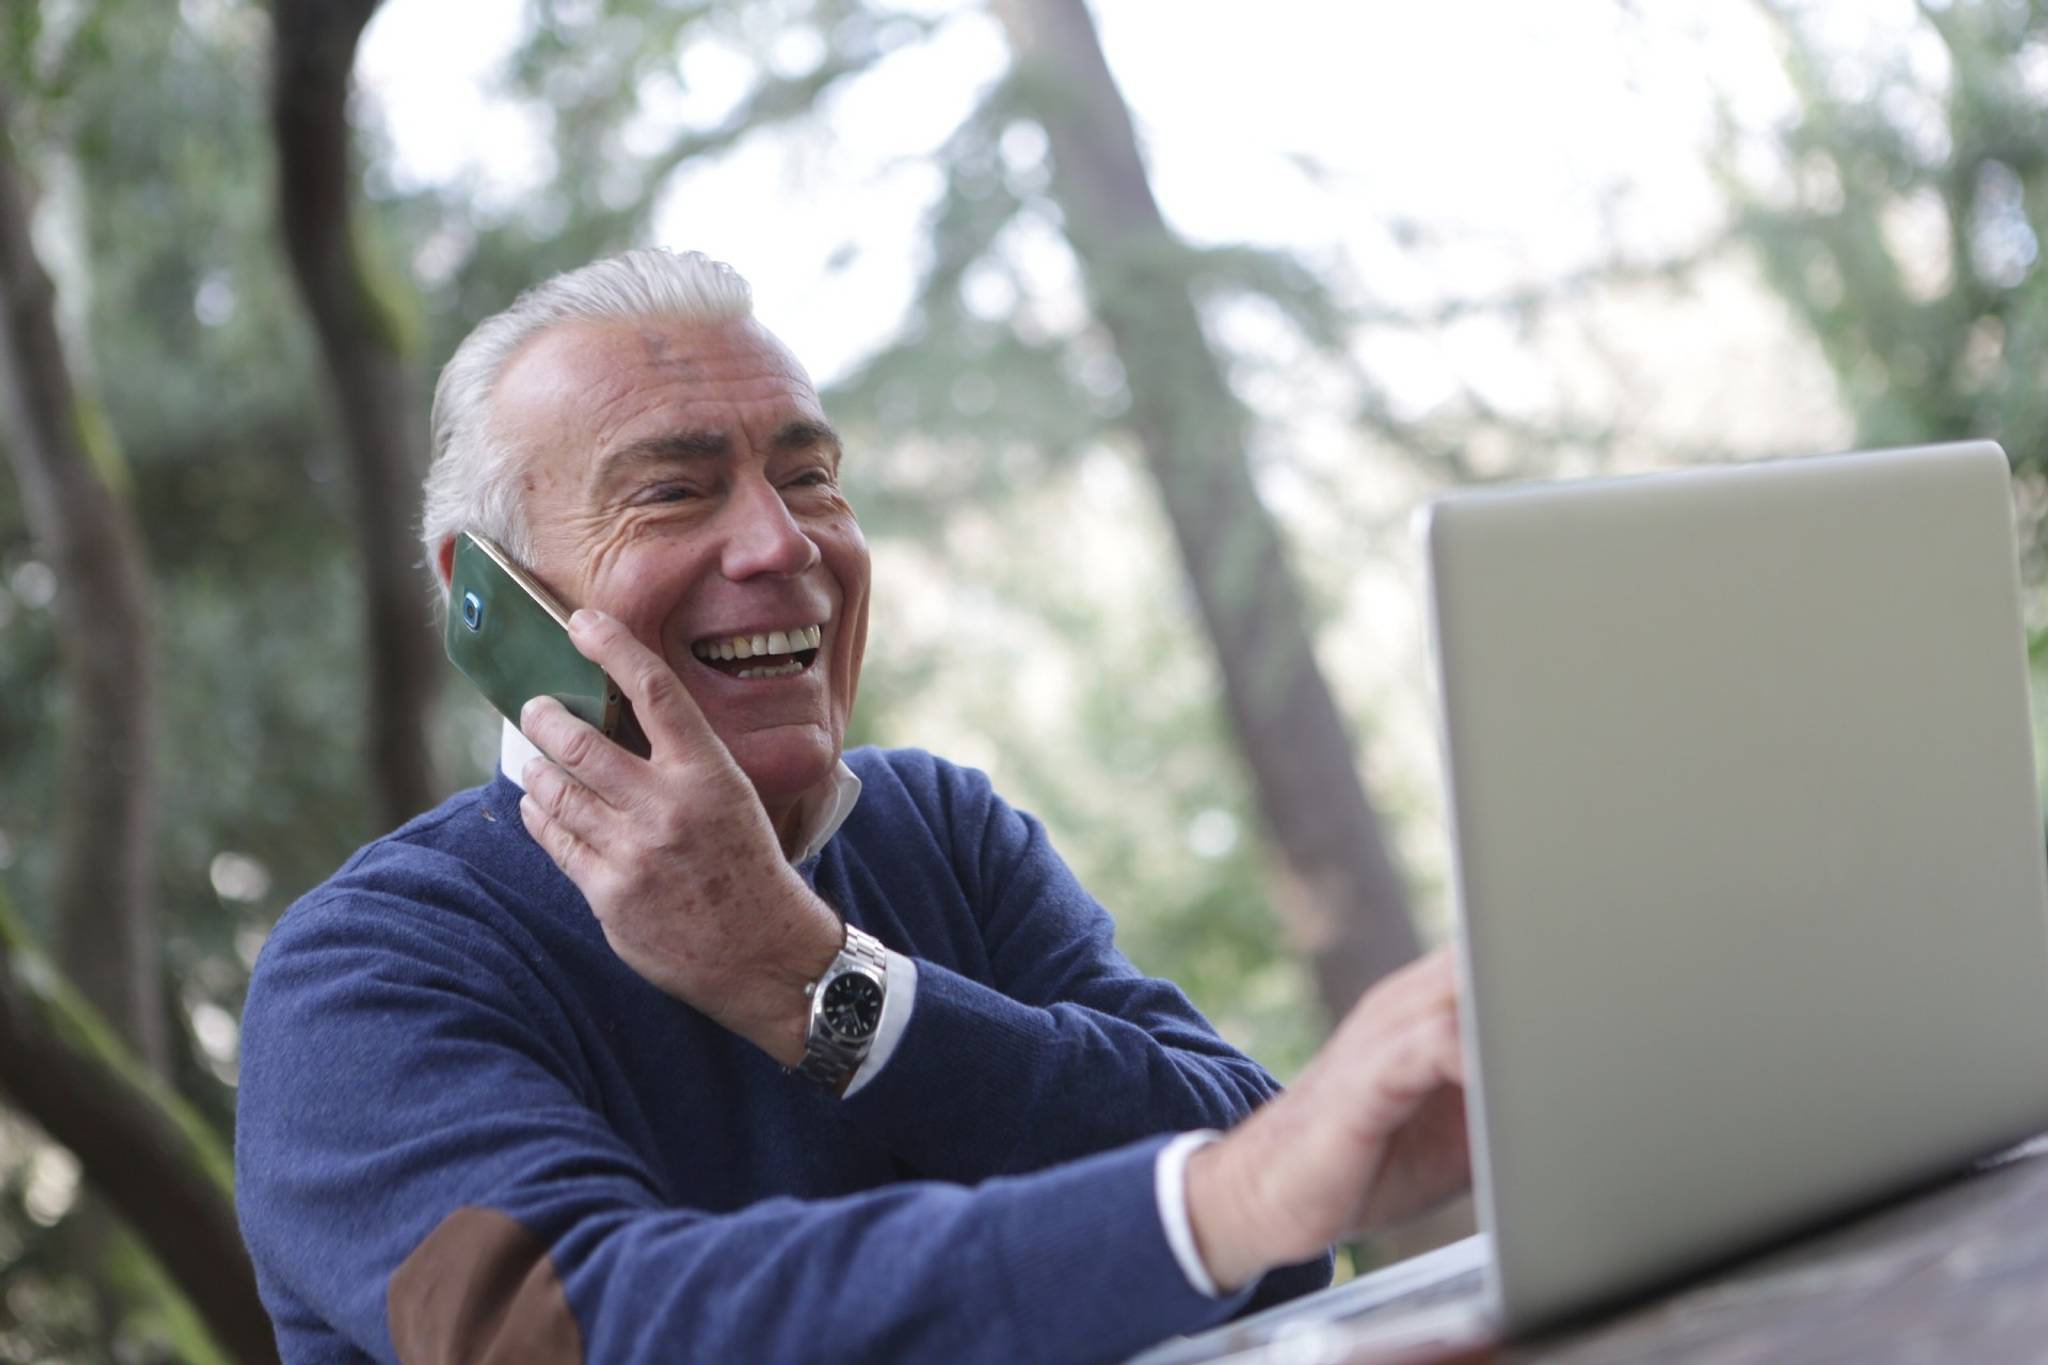 Seniors embrace telehealth as services move online